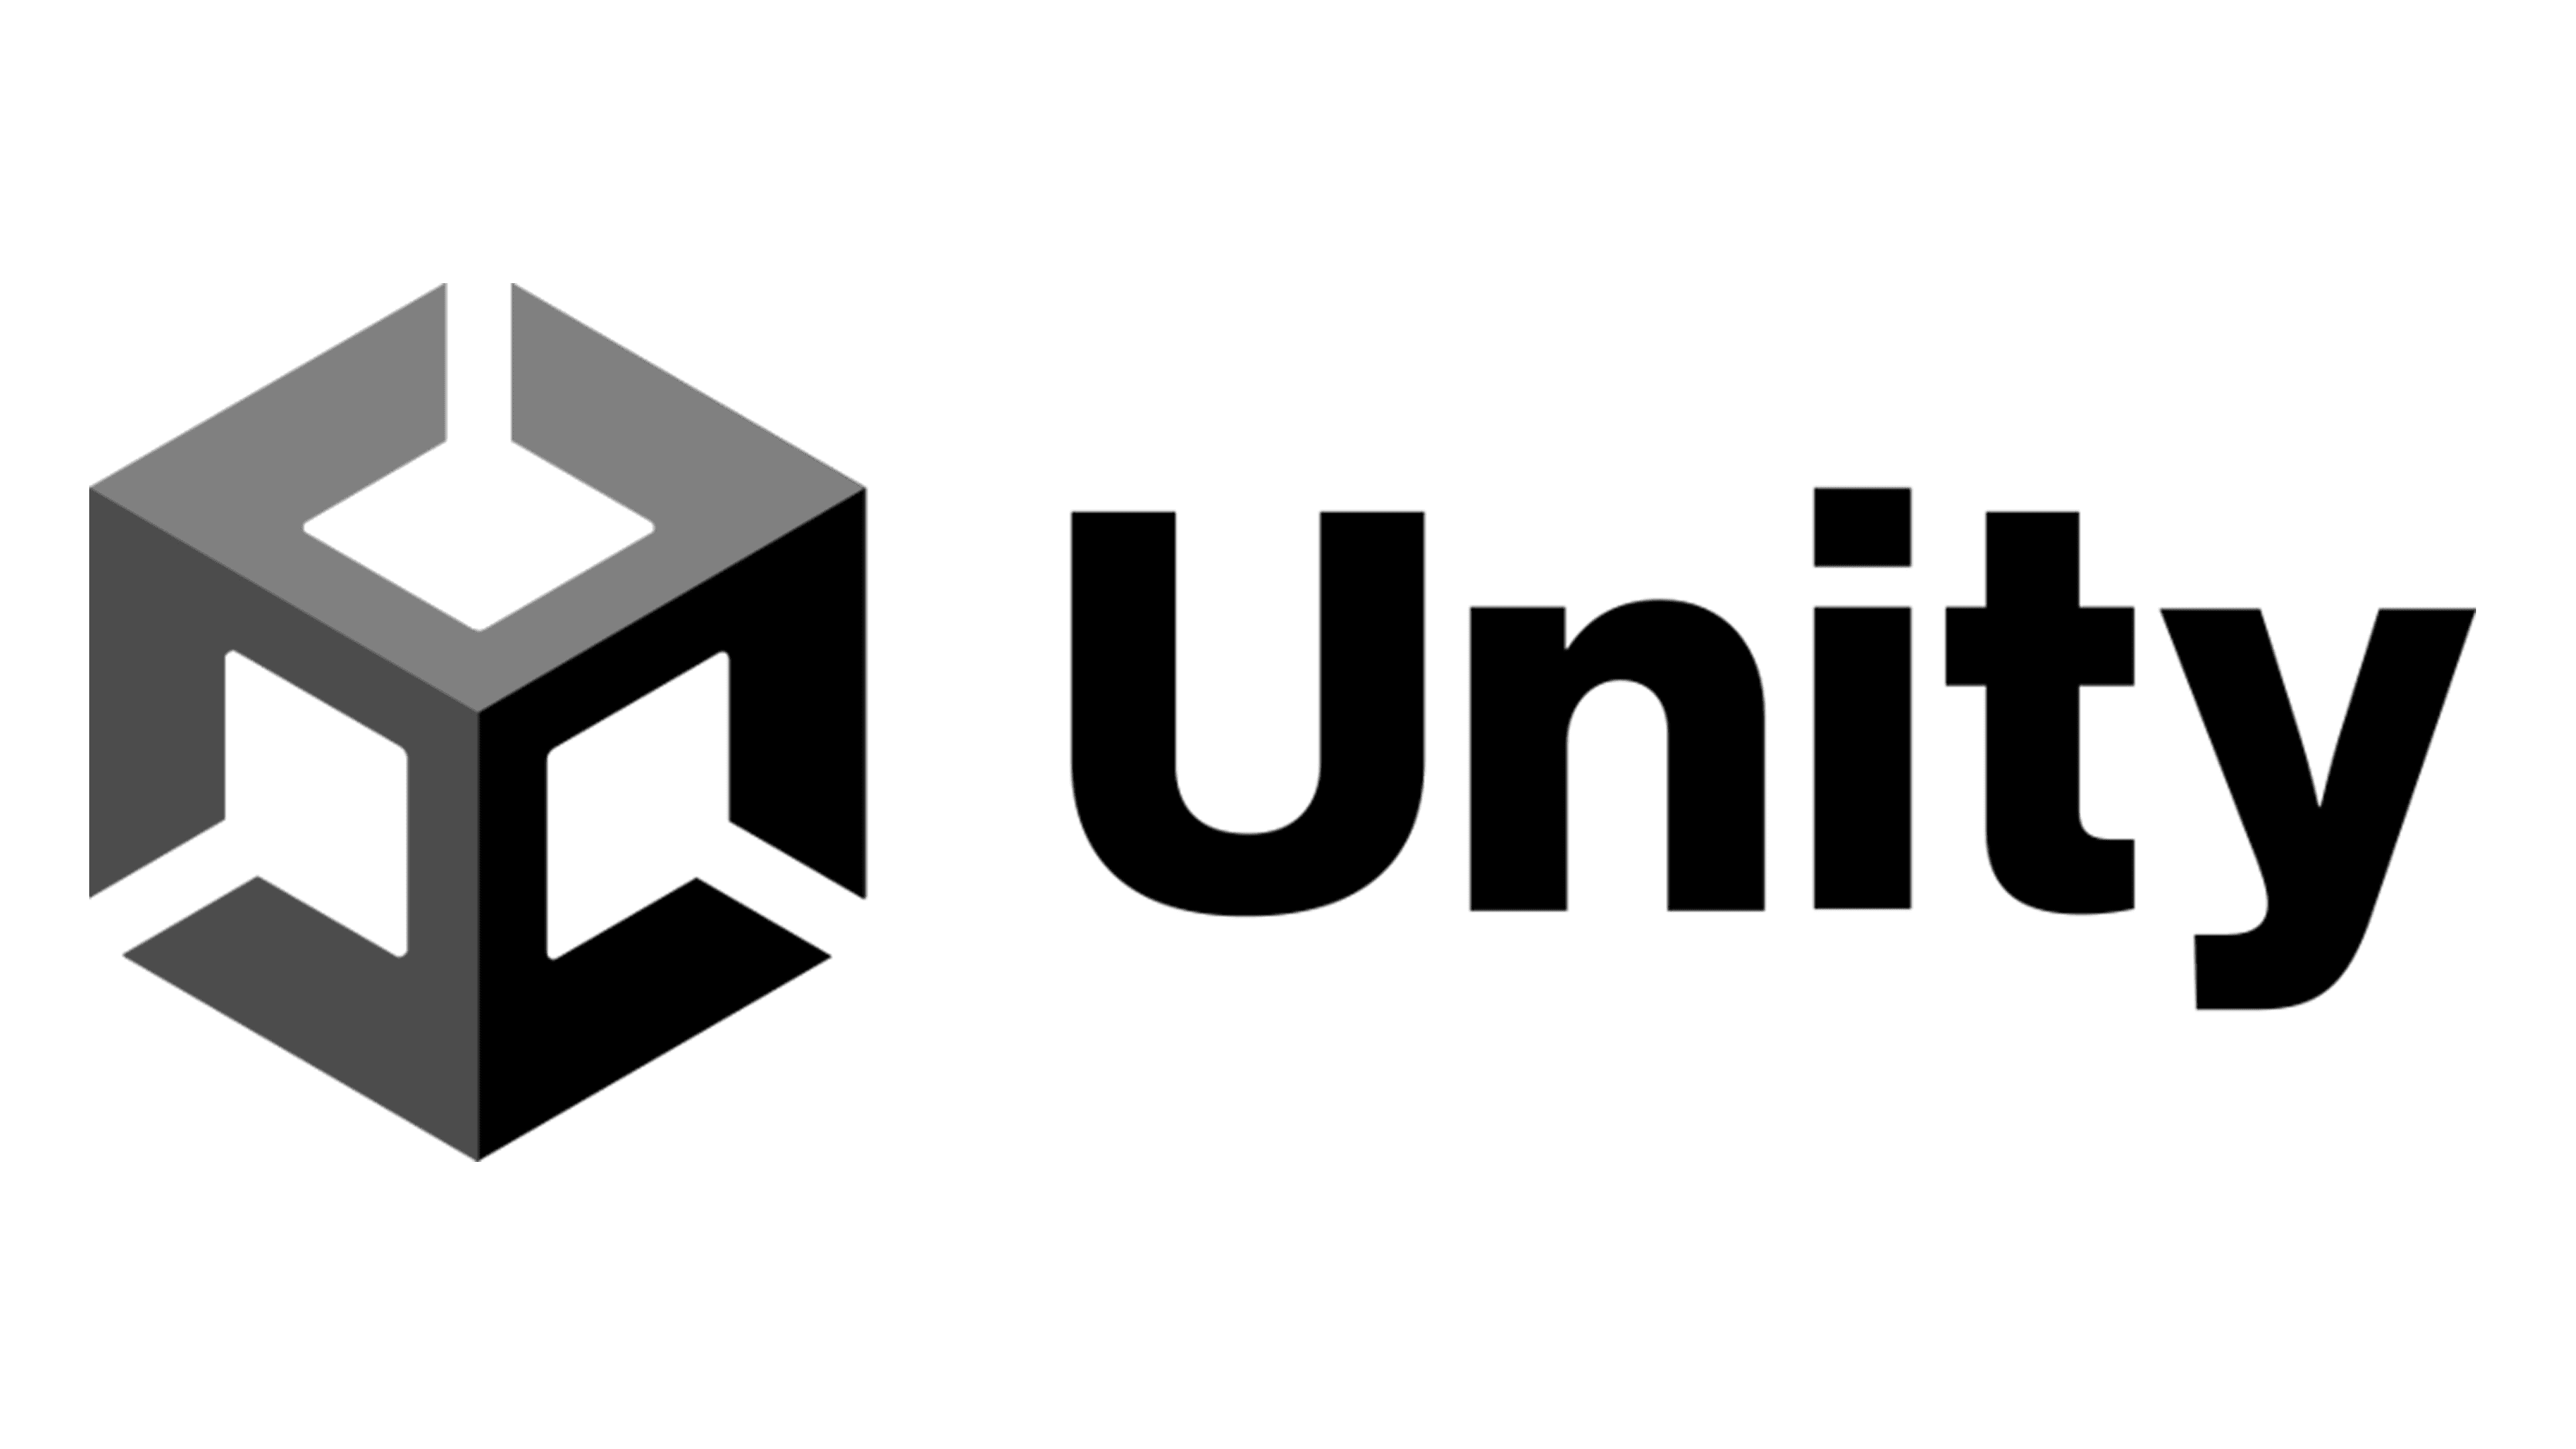 unity logo png